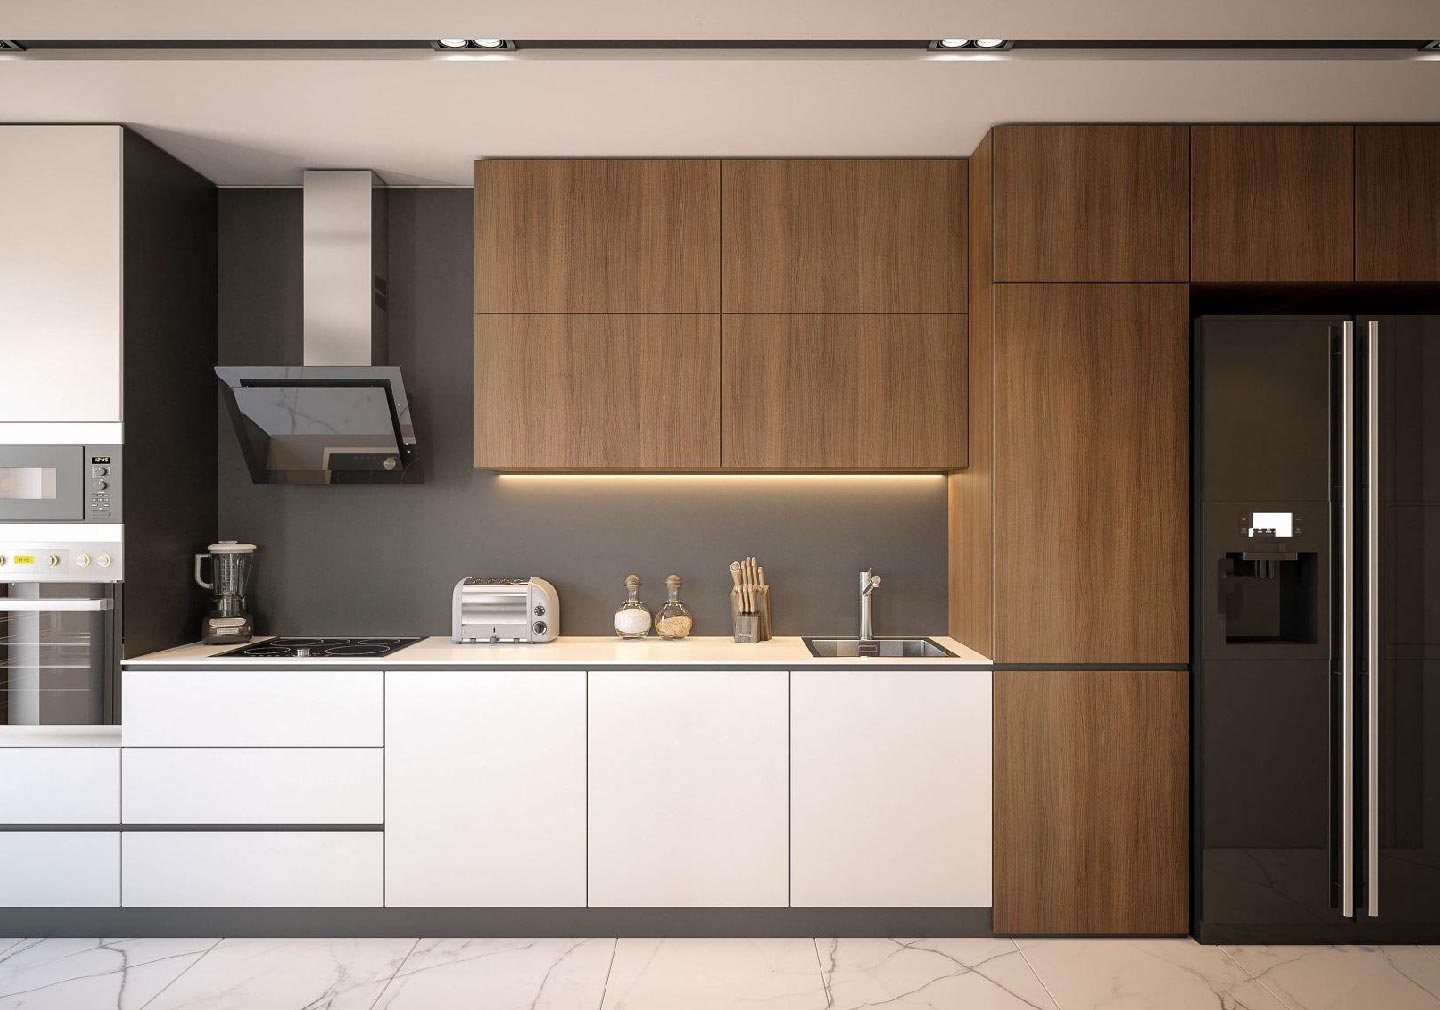 Latest modular kitchen interior design with wooden cabinets